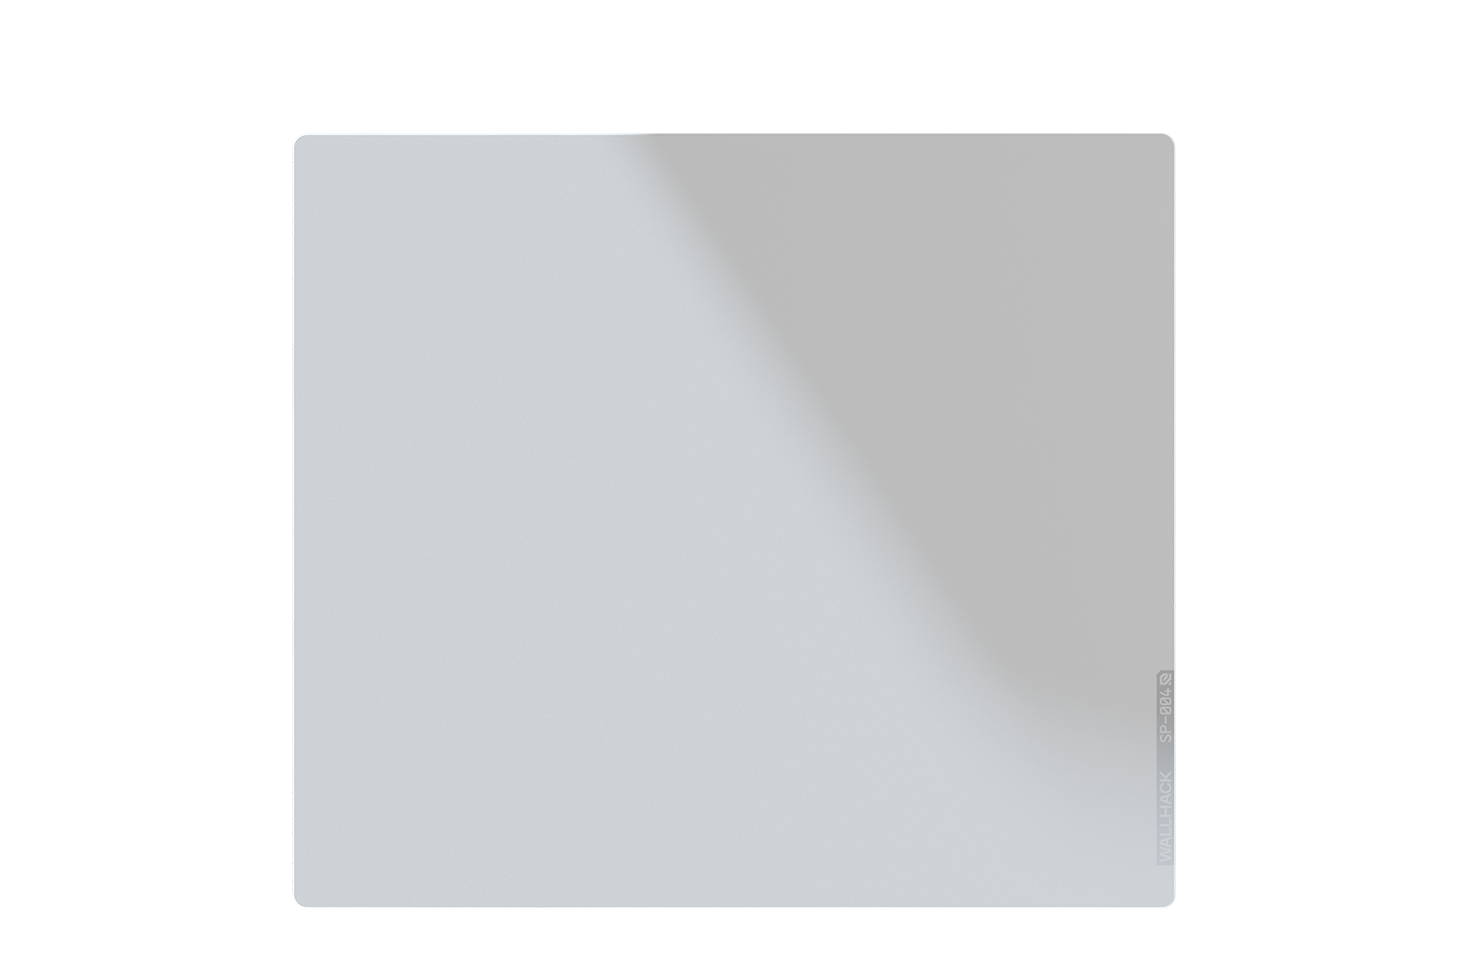 Glasspad SP-004 (White)